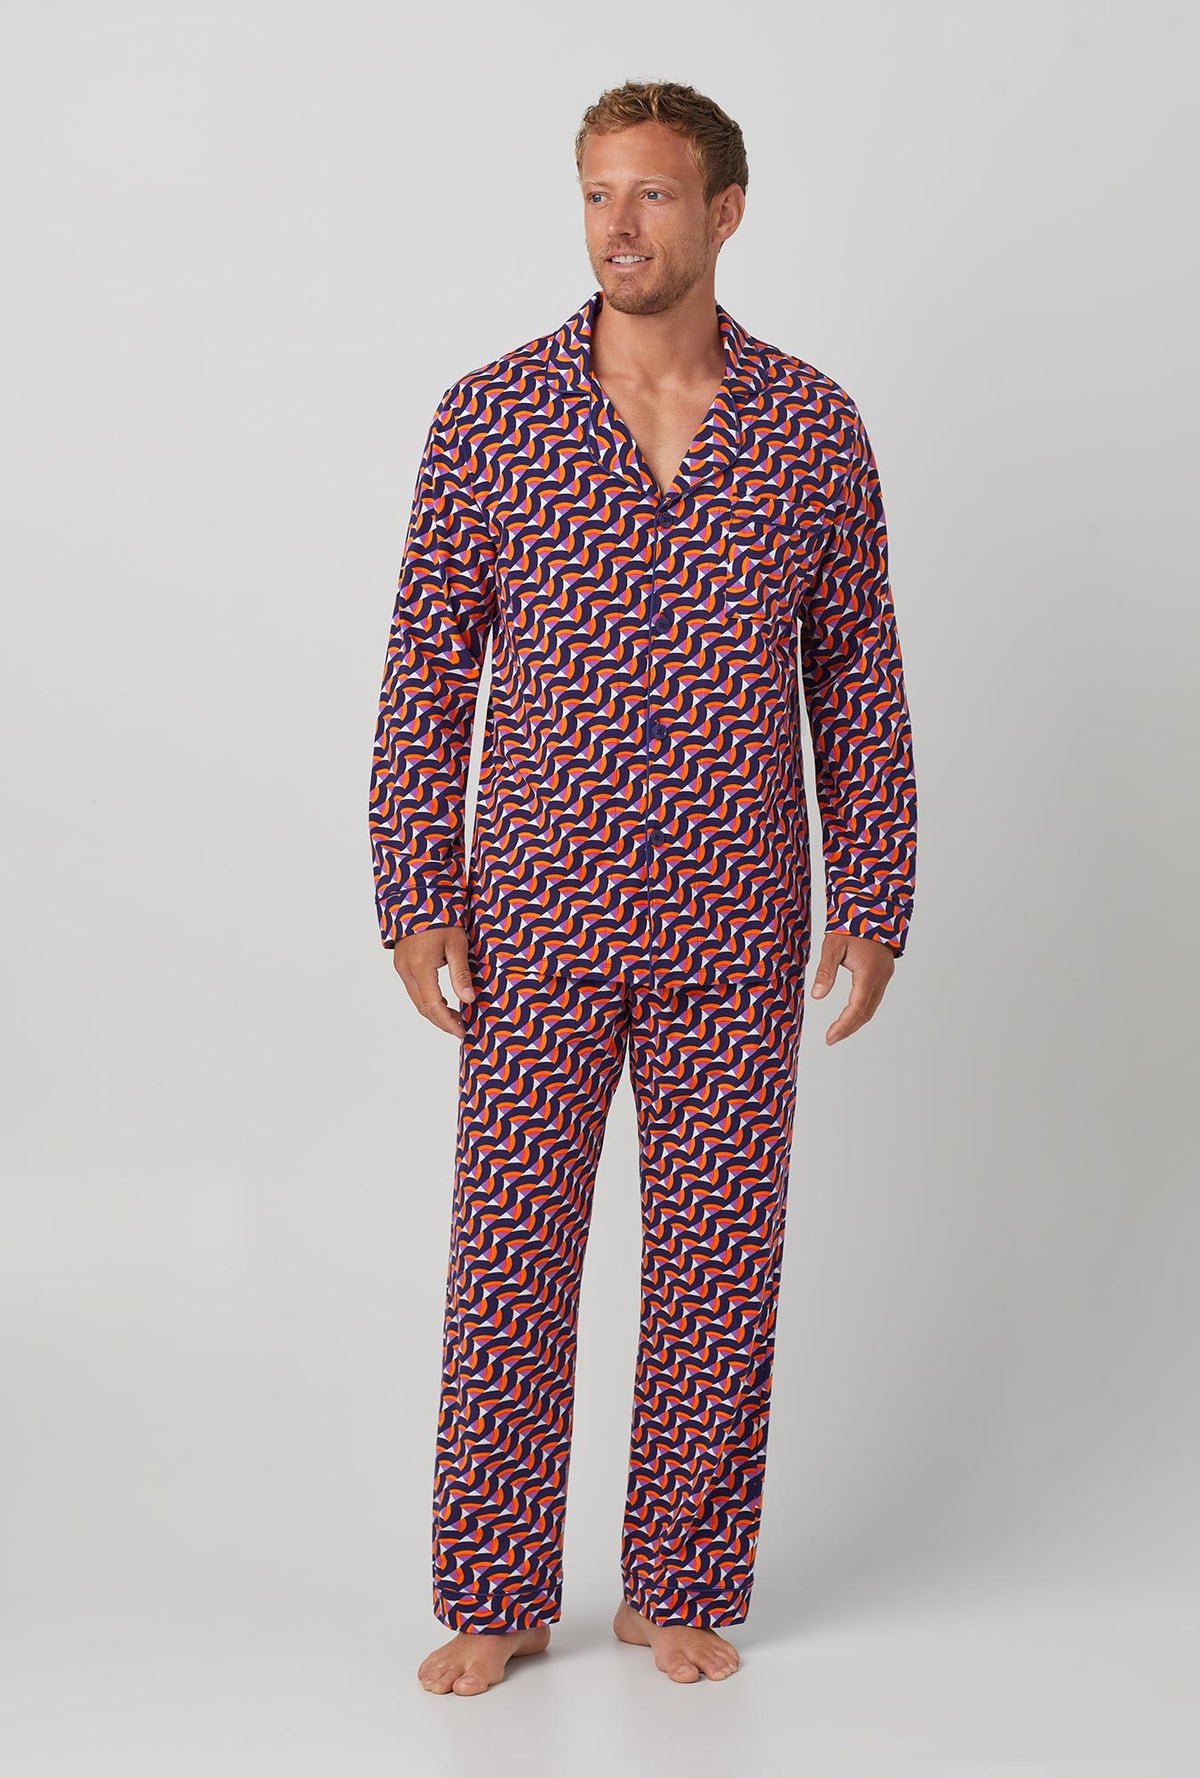 A man wearing Geo Rainbow Men&#39;s Long Sleeve Classic Stretch Jersey PJ Set